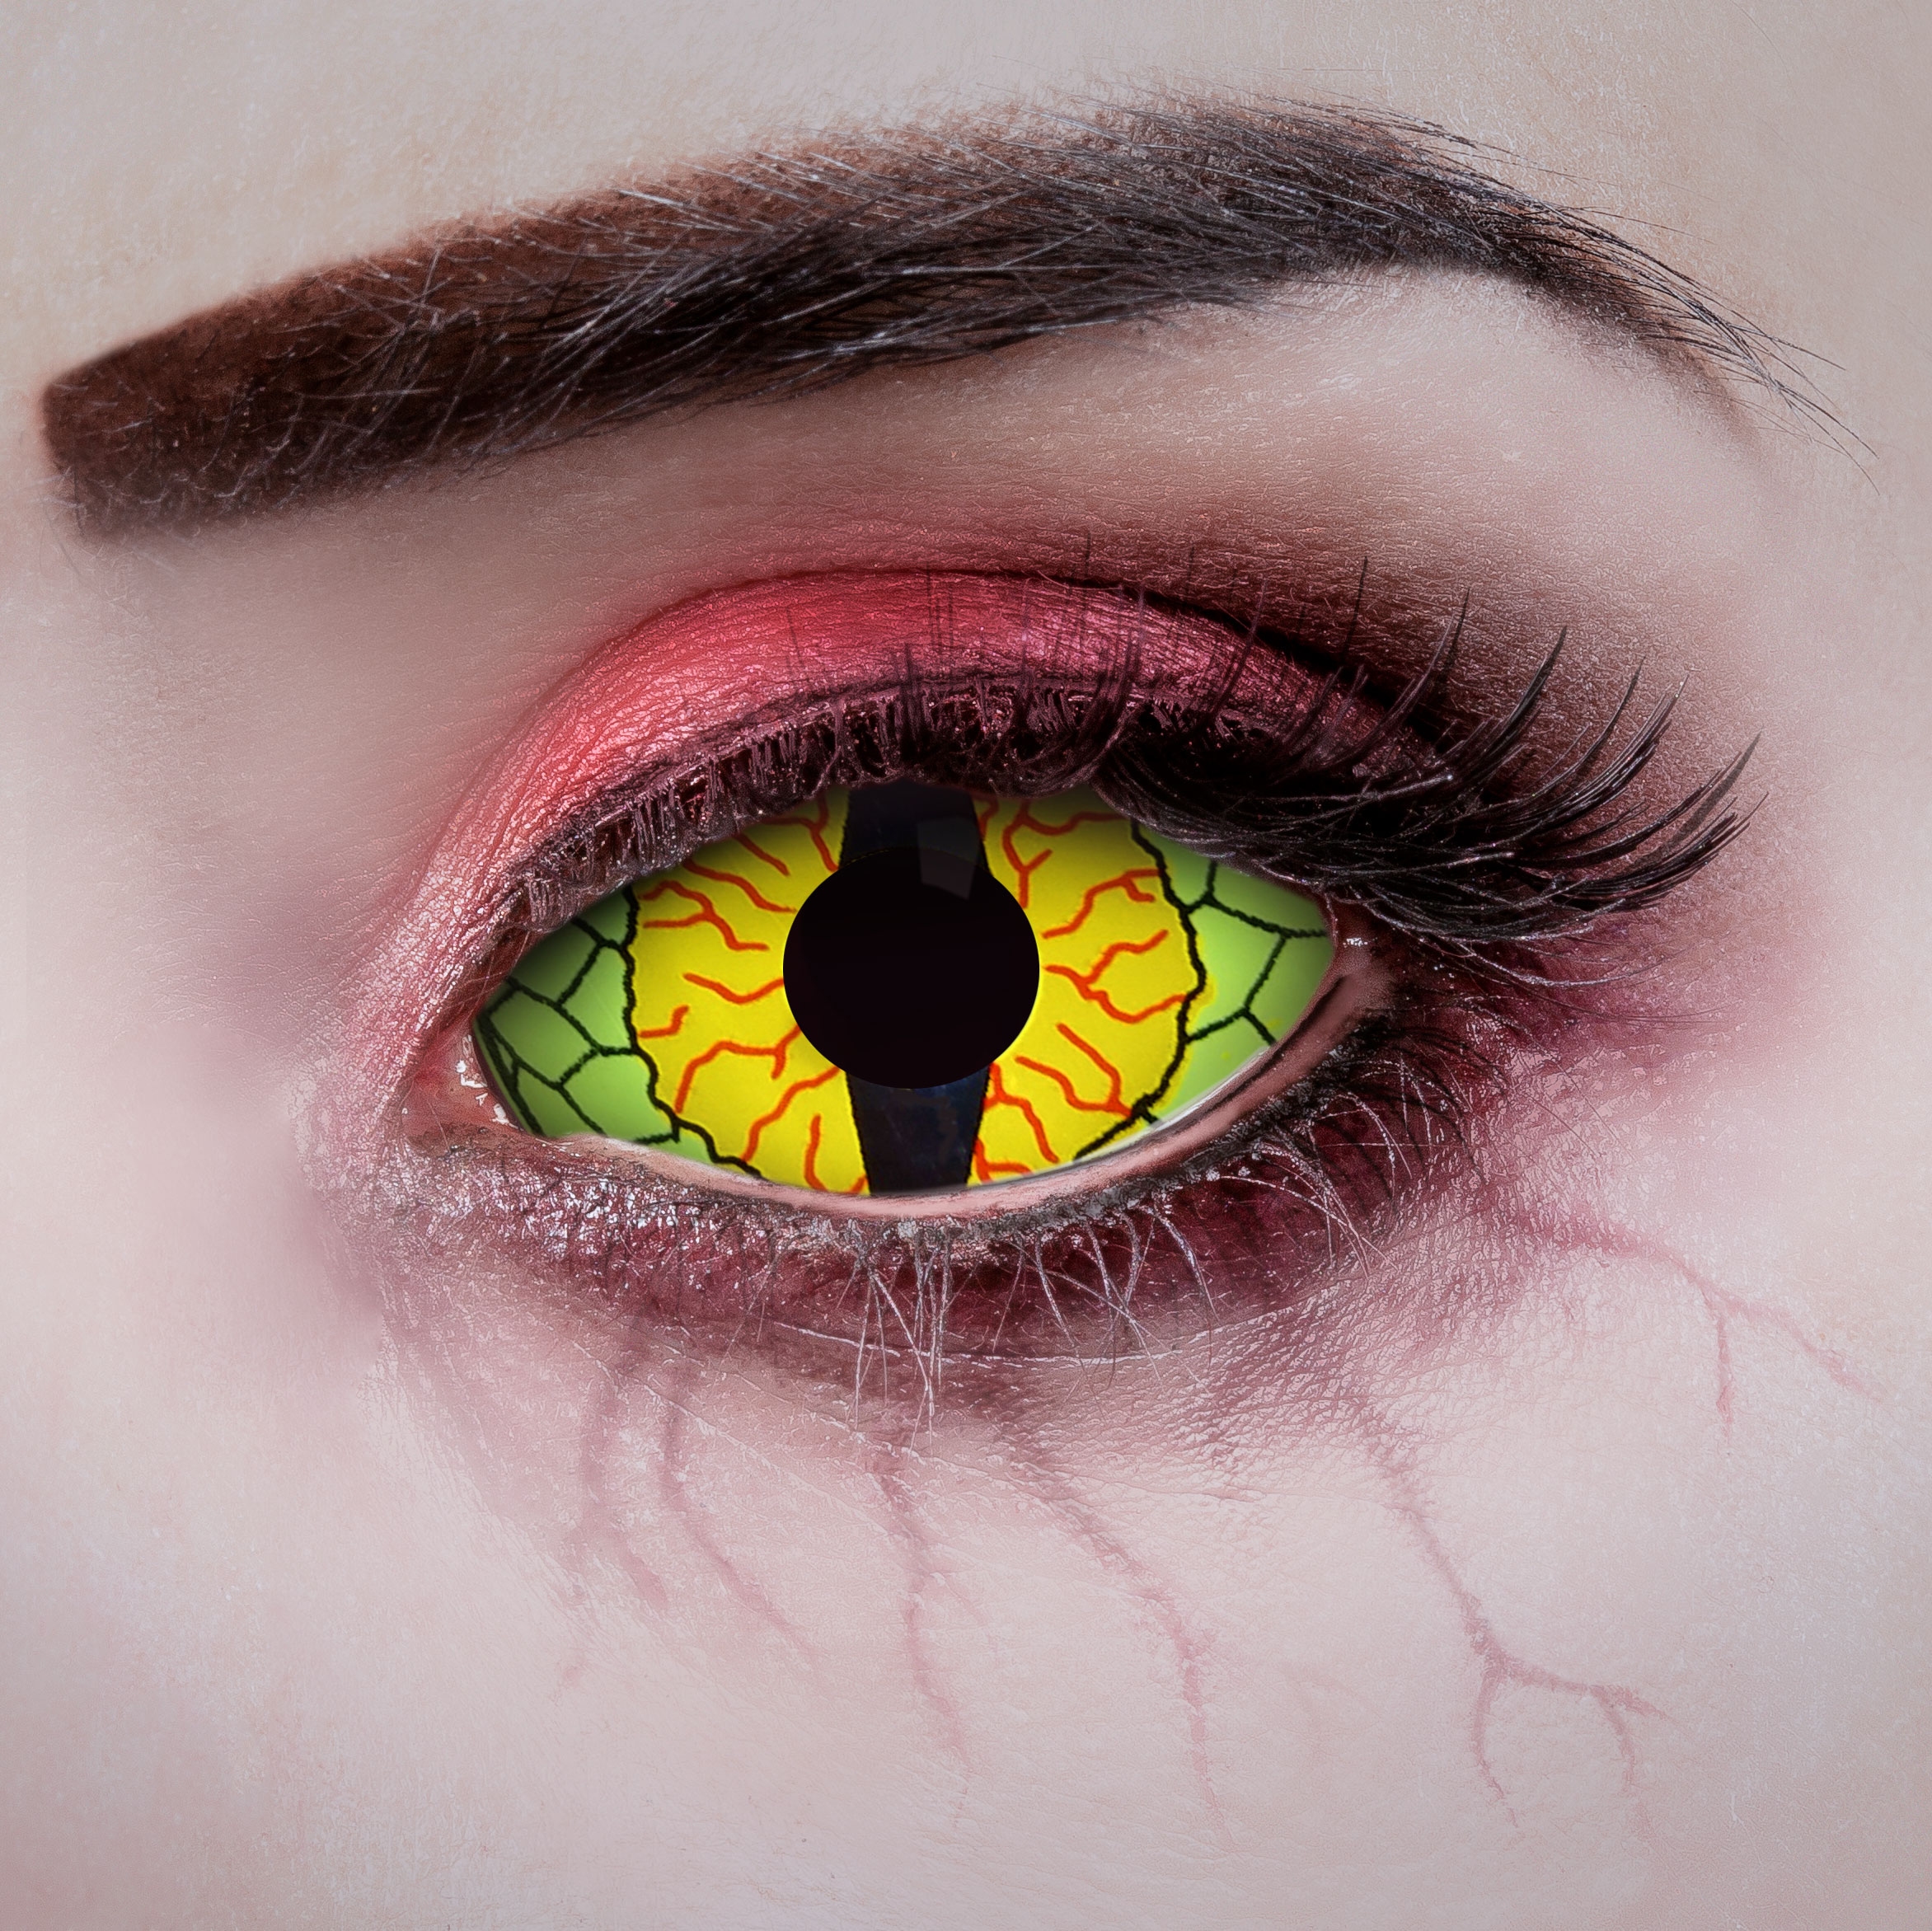 Sclera Eye Funlenzen 22mm, groen/geel, jaarlenzen